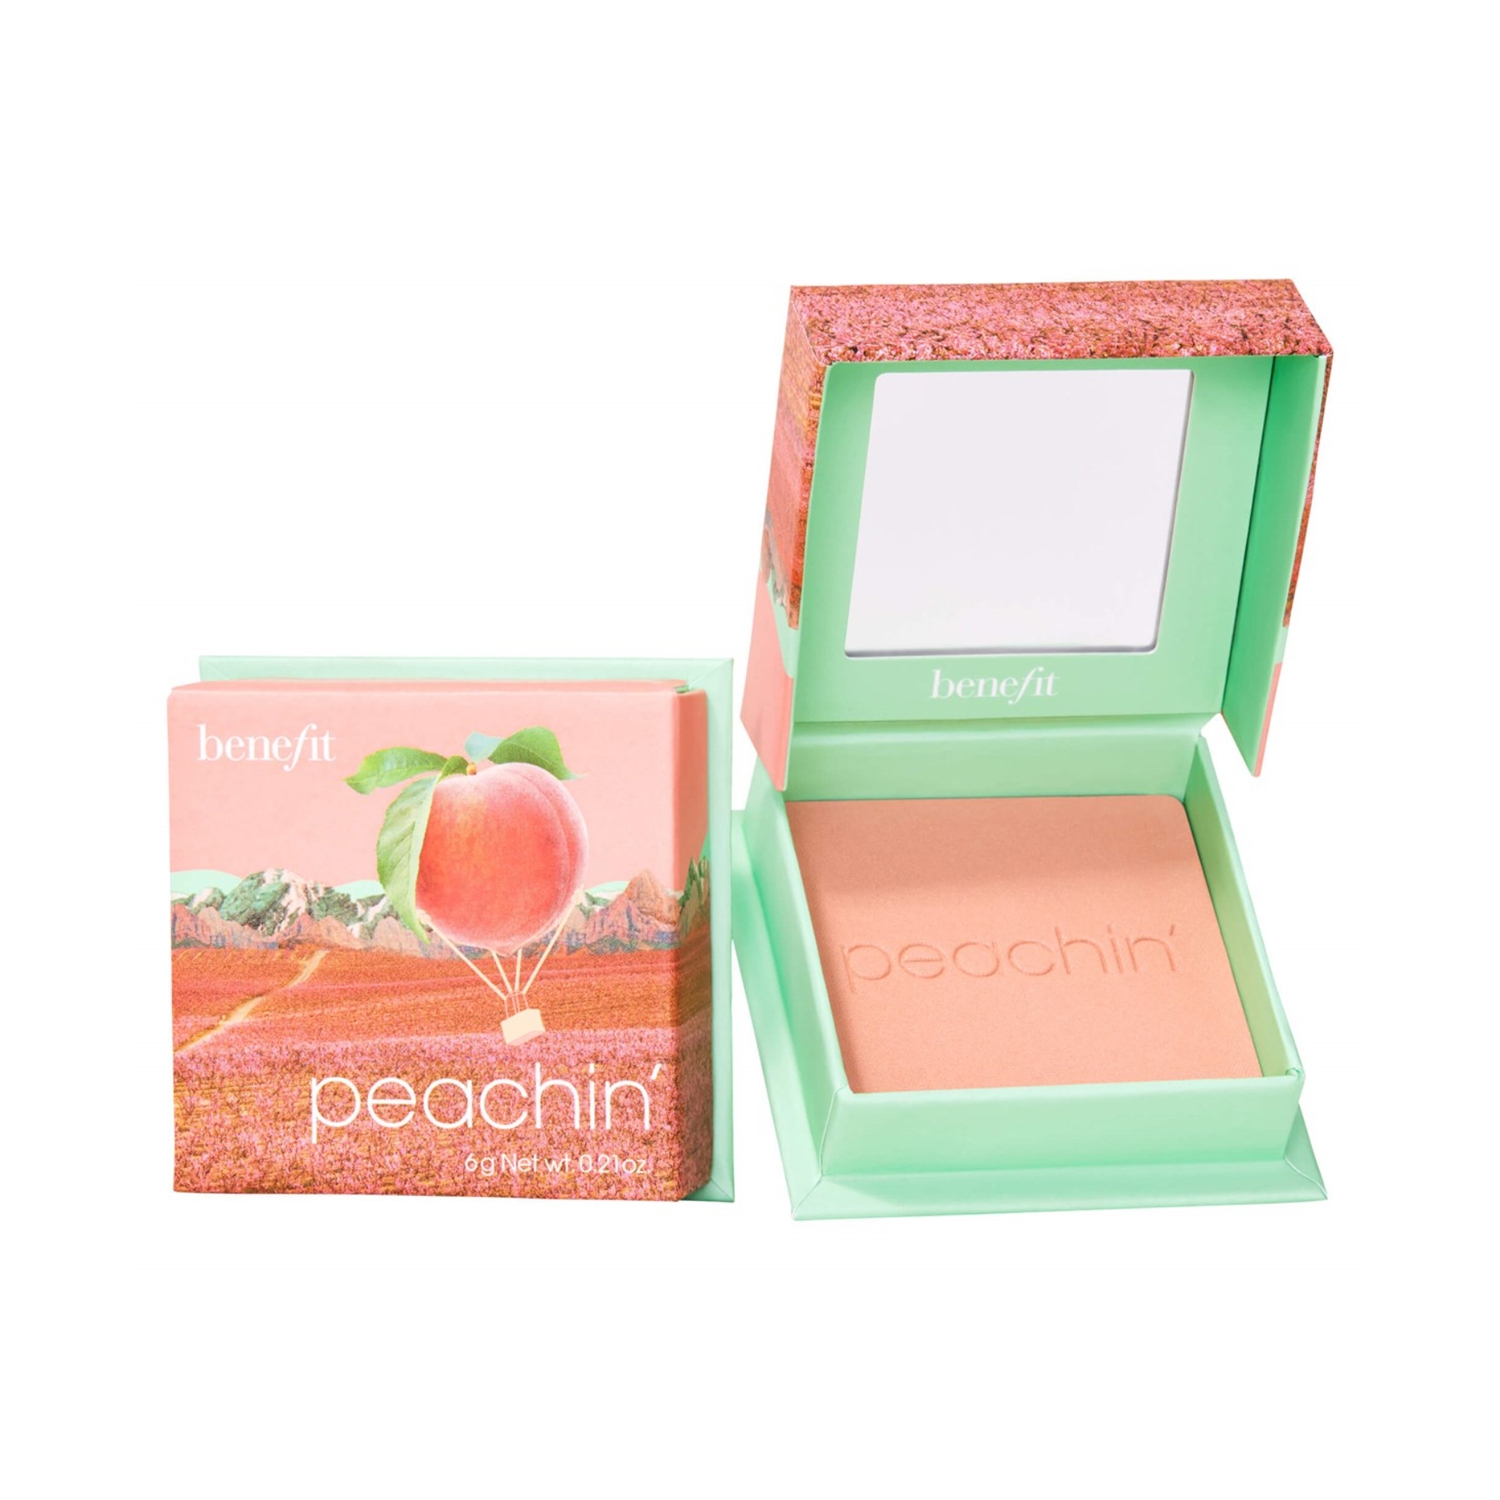 Benefit Cosmetics | Benefit Cosmetics Peachin' Blush - Golden Peach (6g)